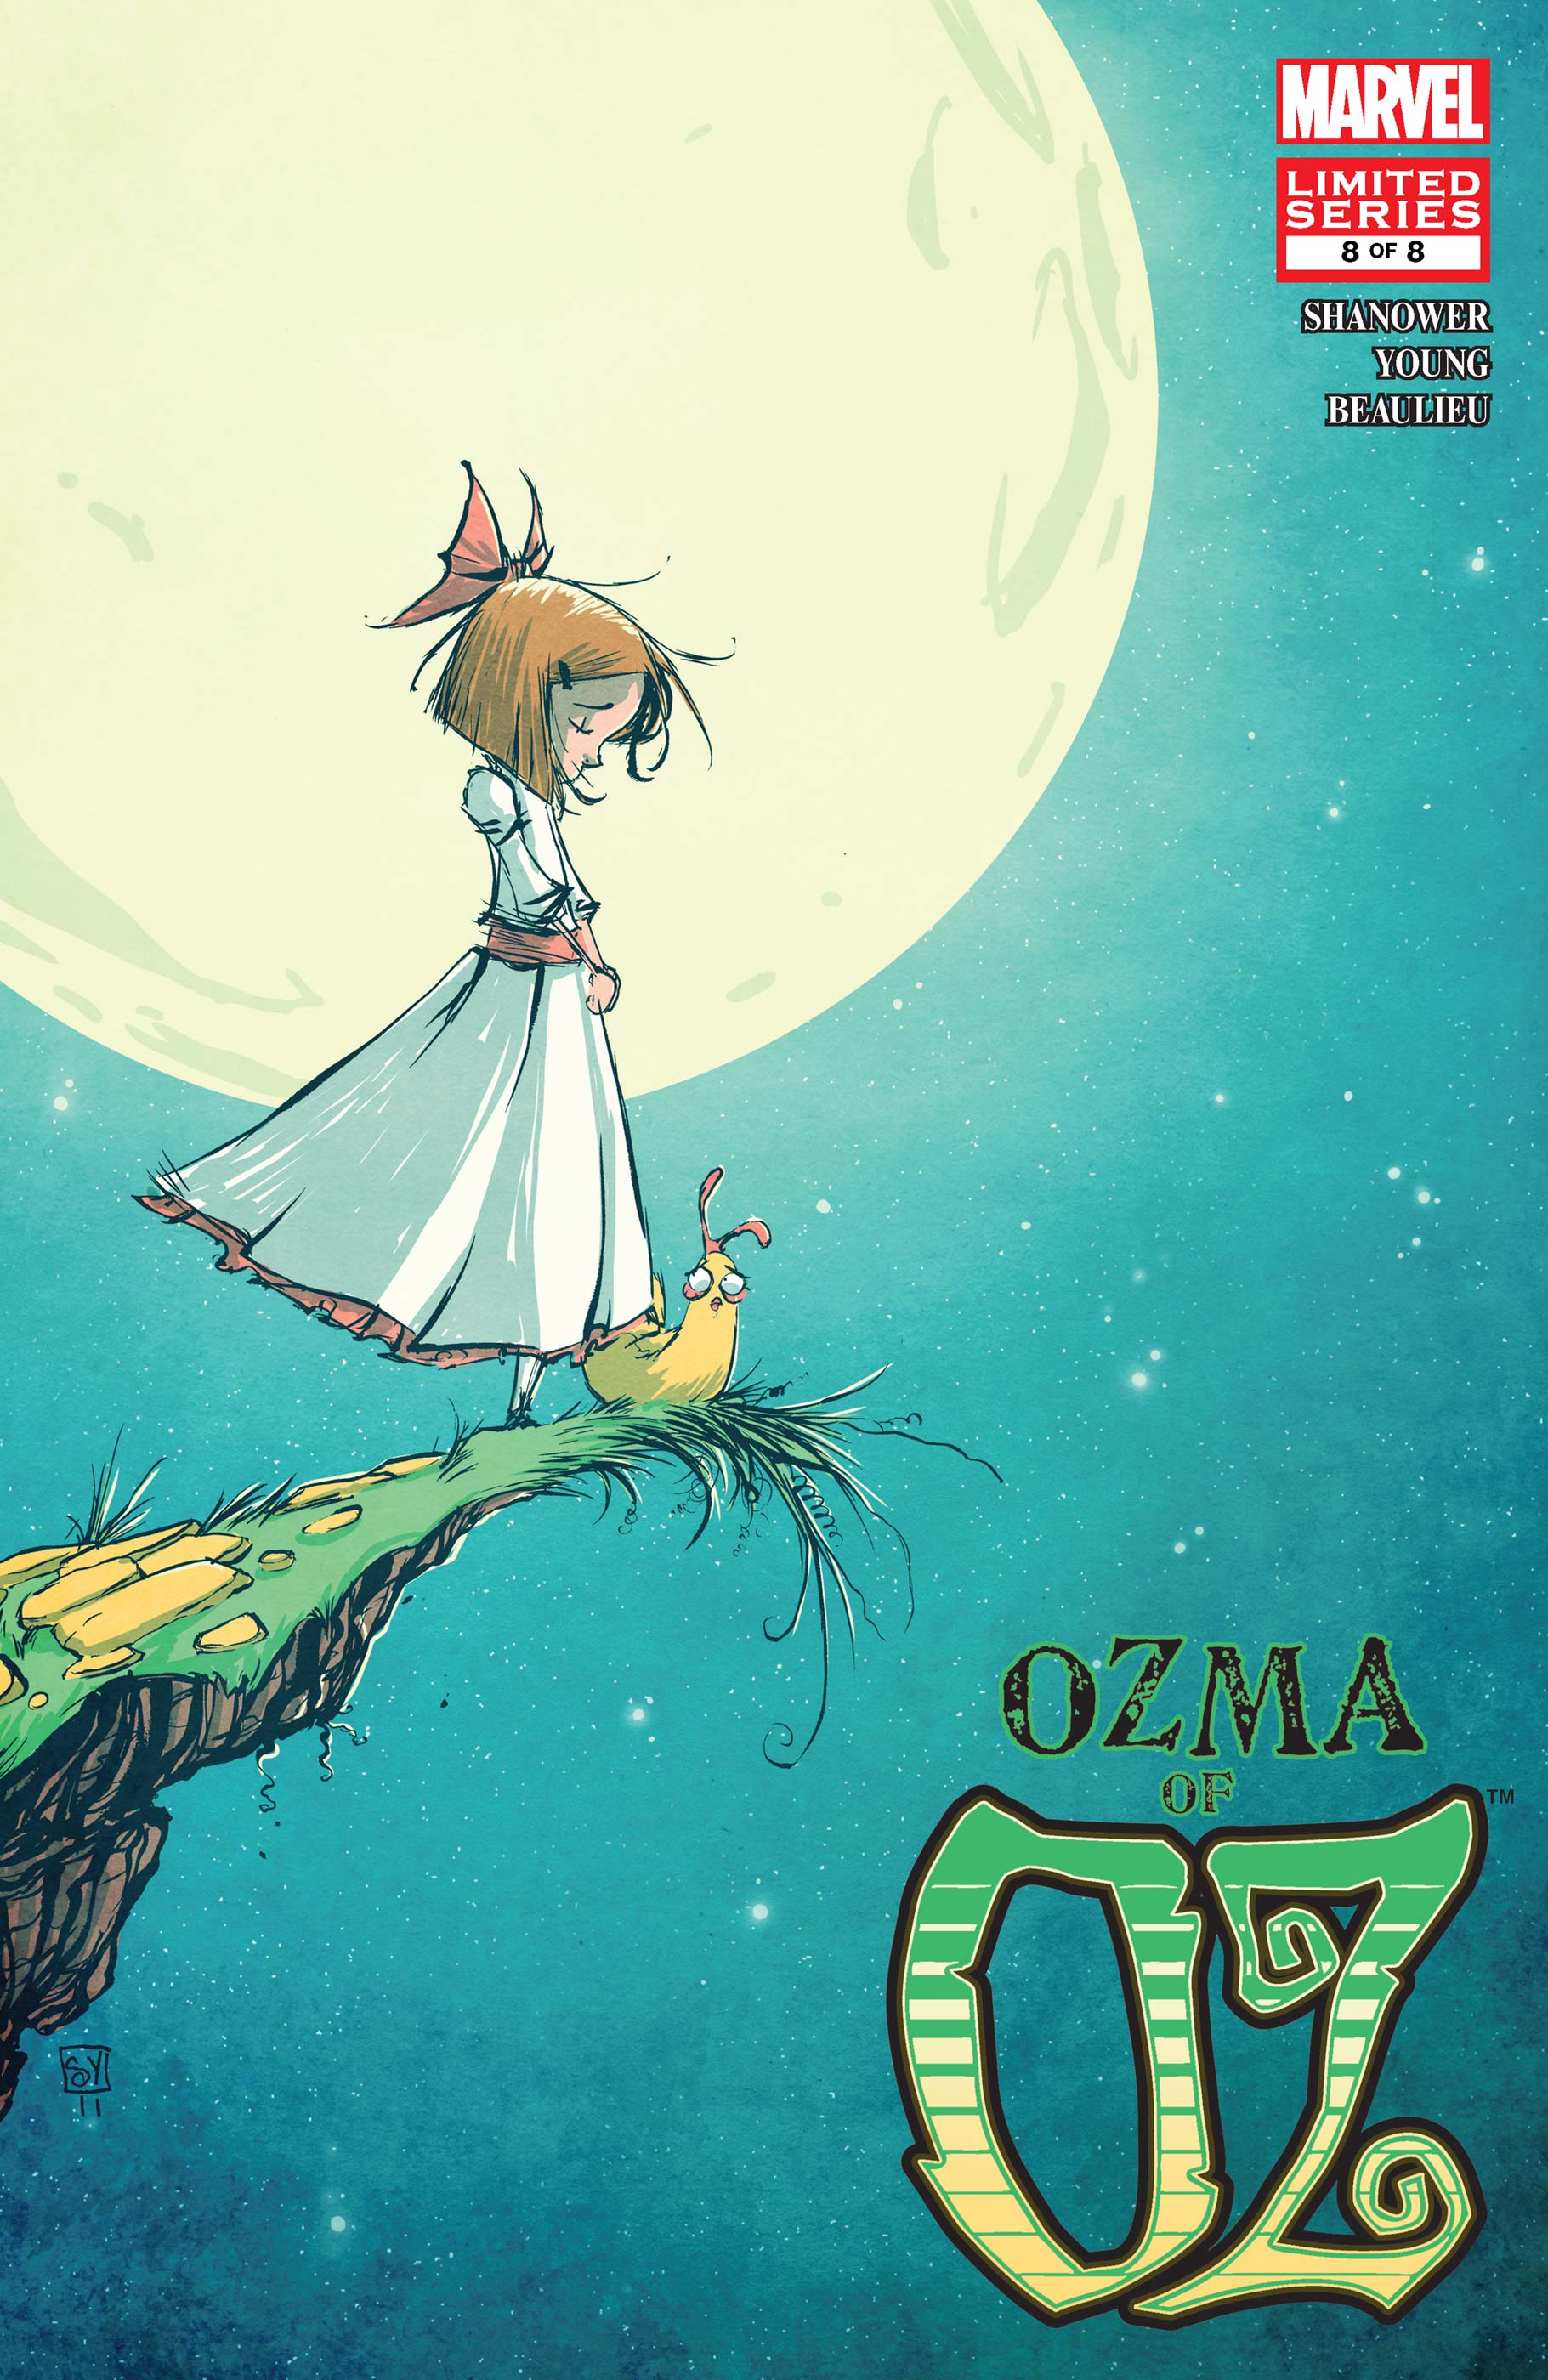 ozma of oz book series